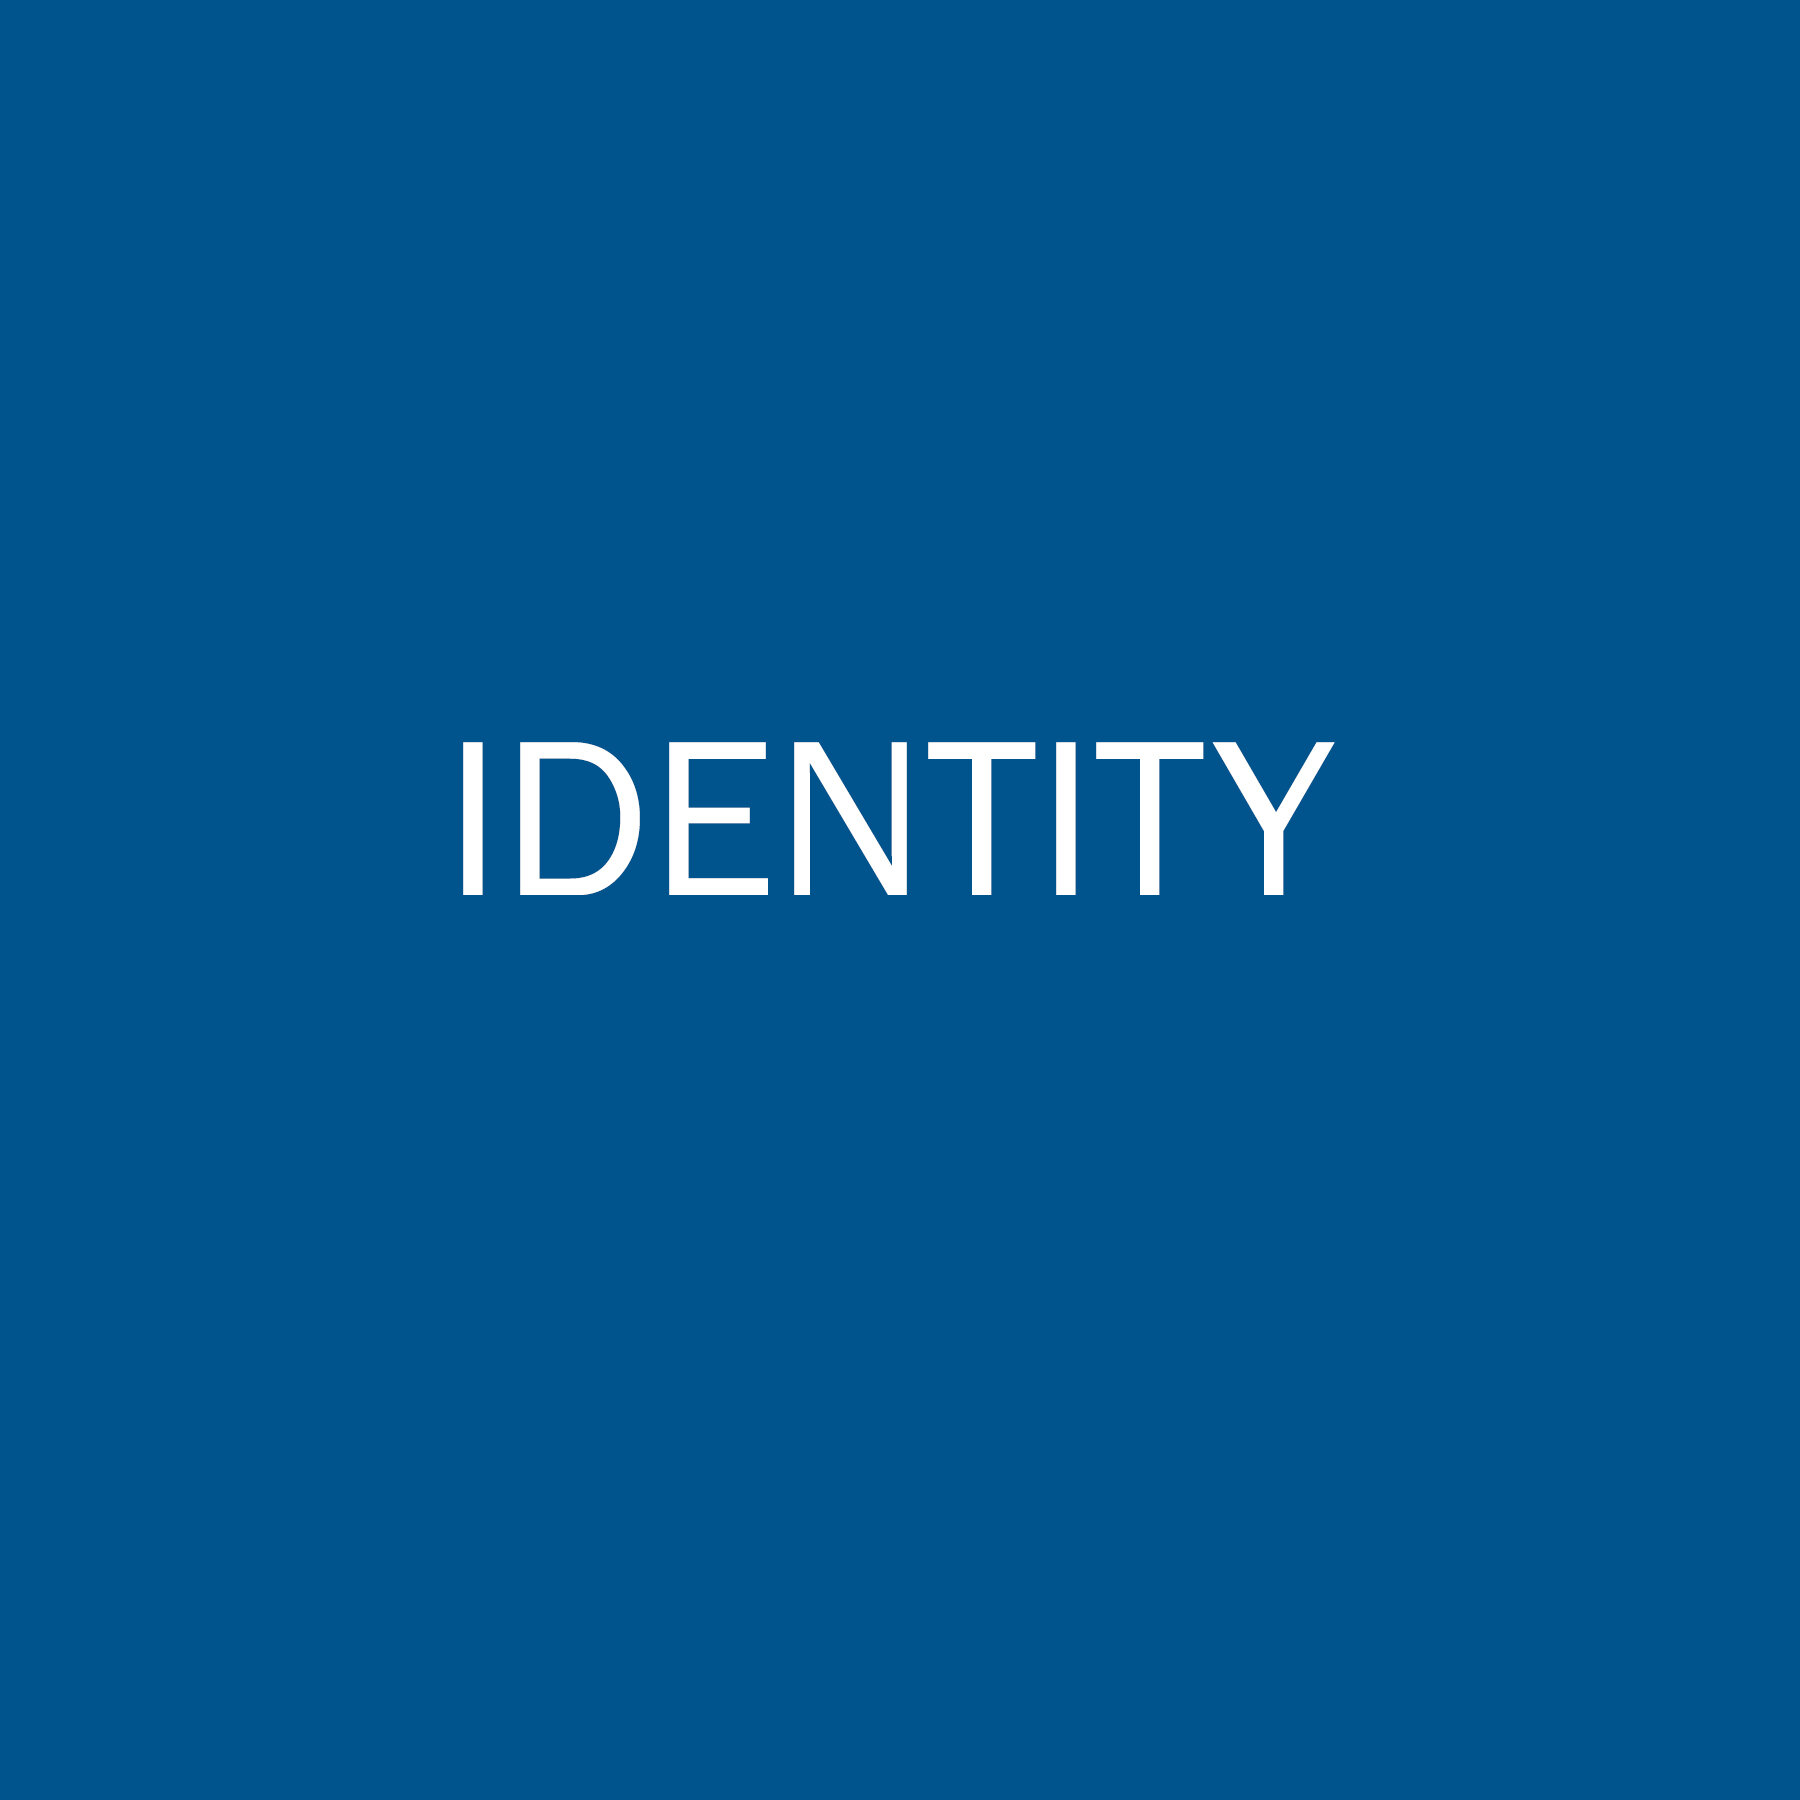 identity title image.jpg